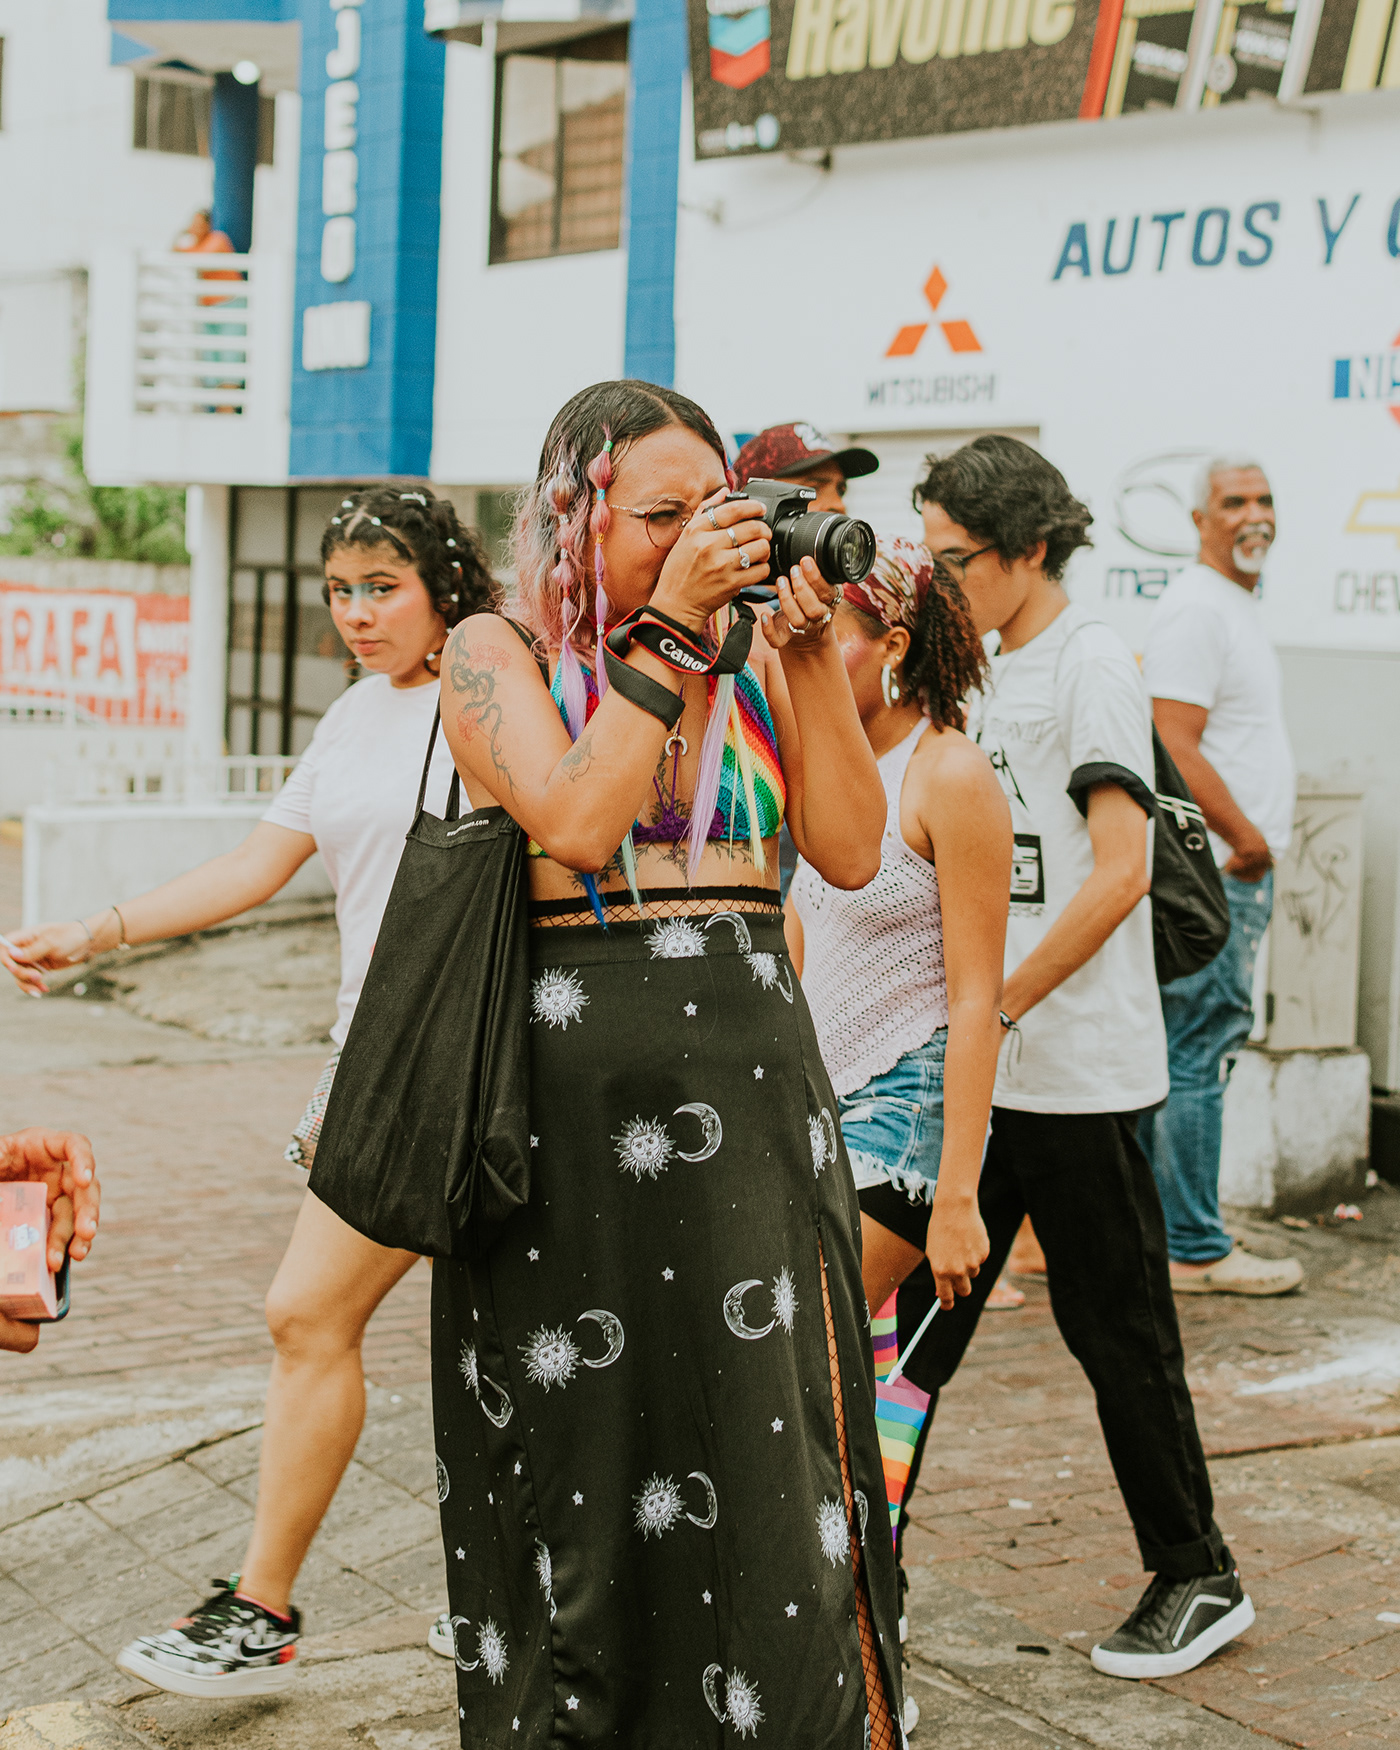 Cartagena colombia kiss lesbian LGBT Love pride queer Drag gay